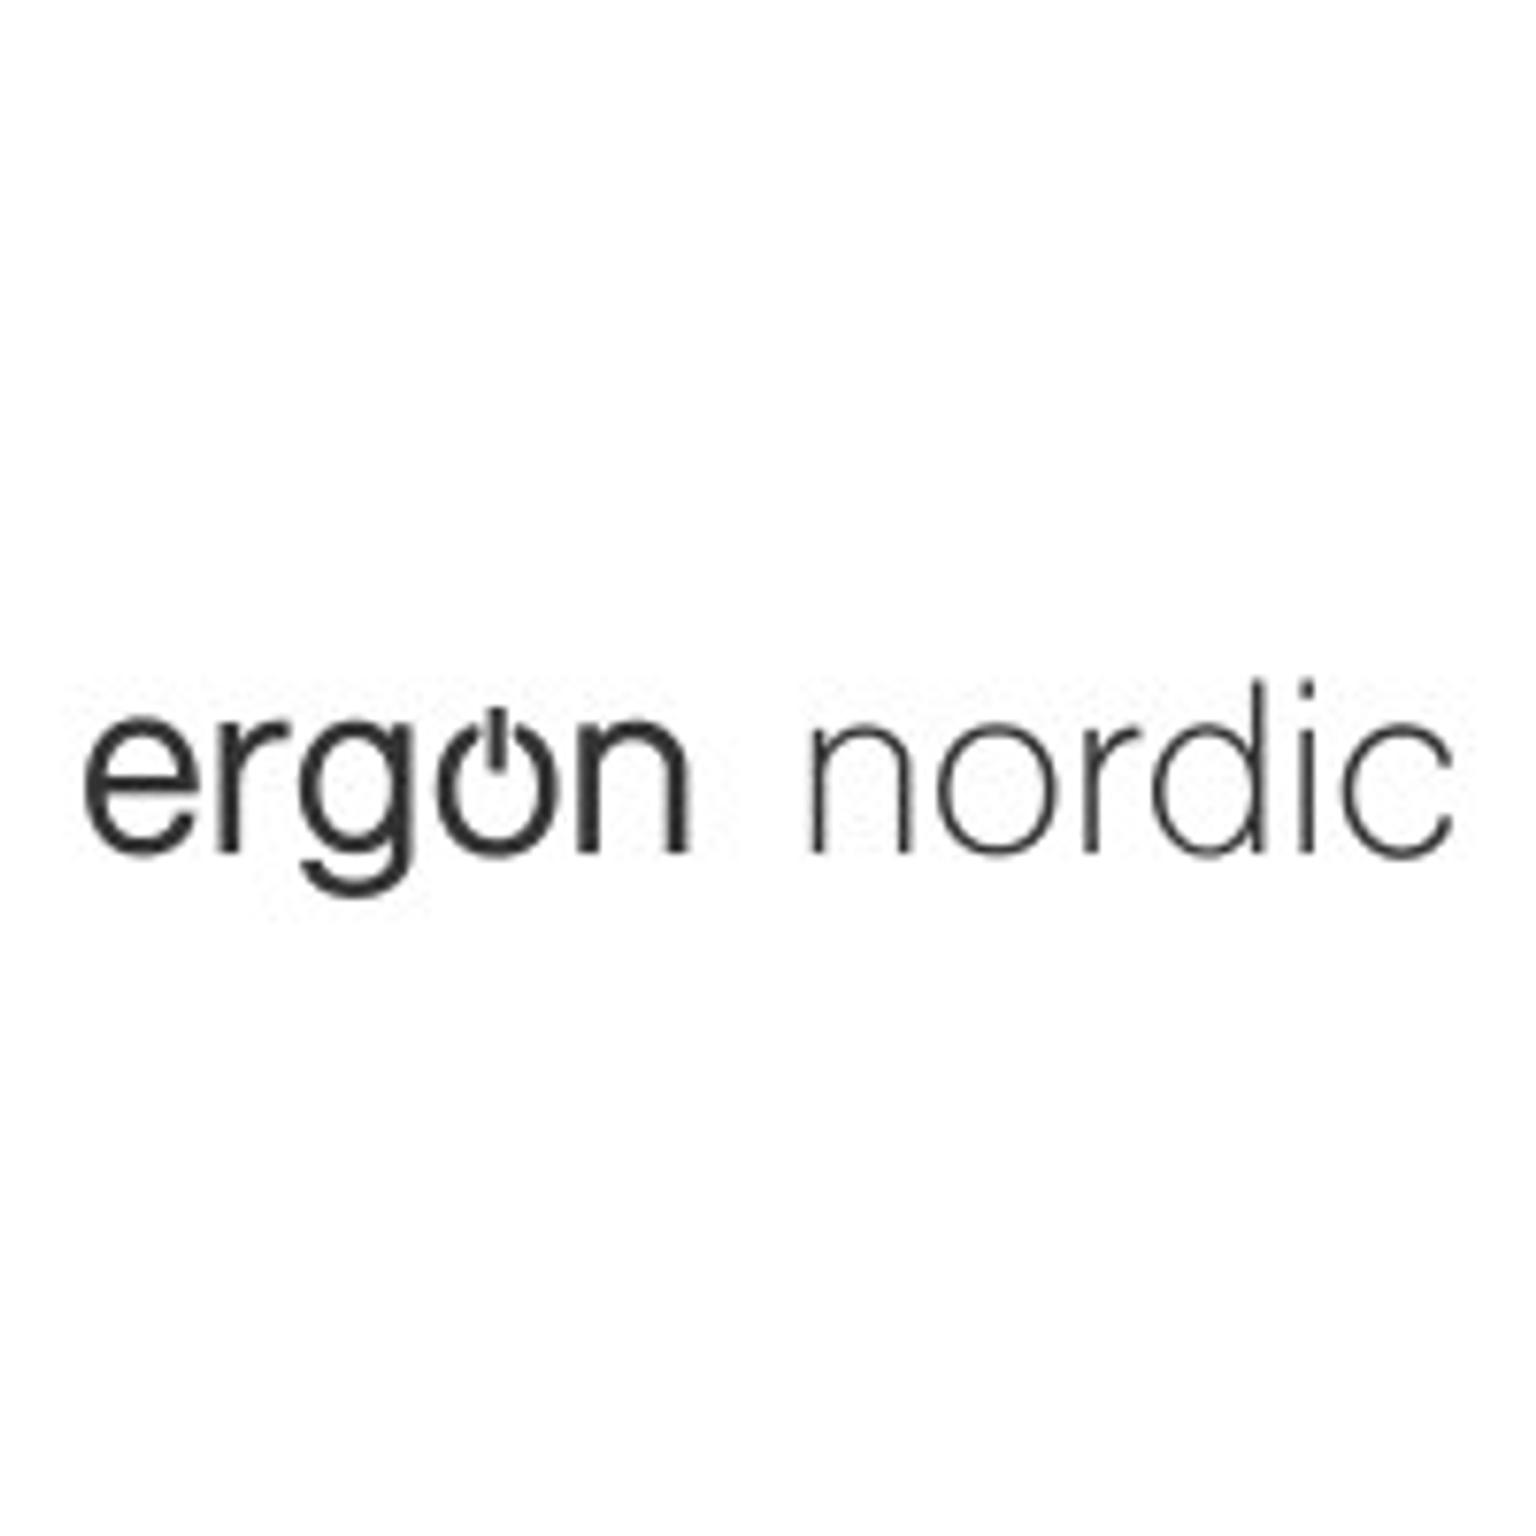 ERGON NORDIC AS